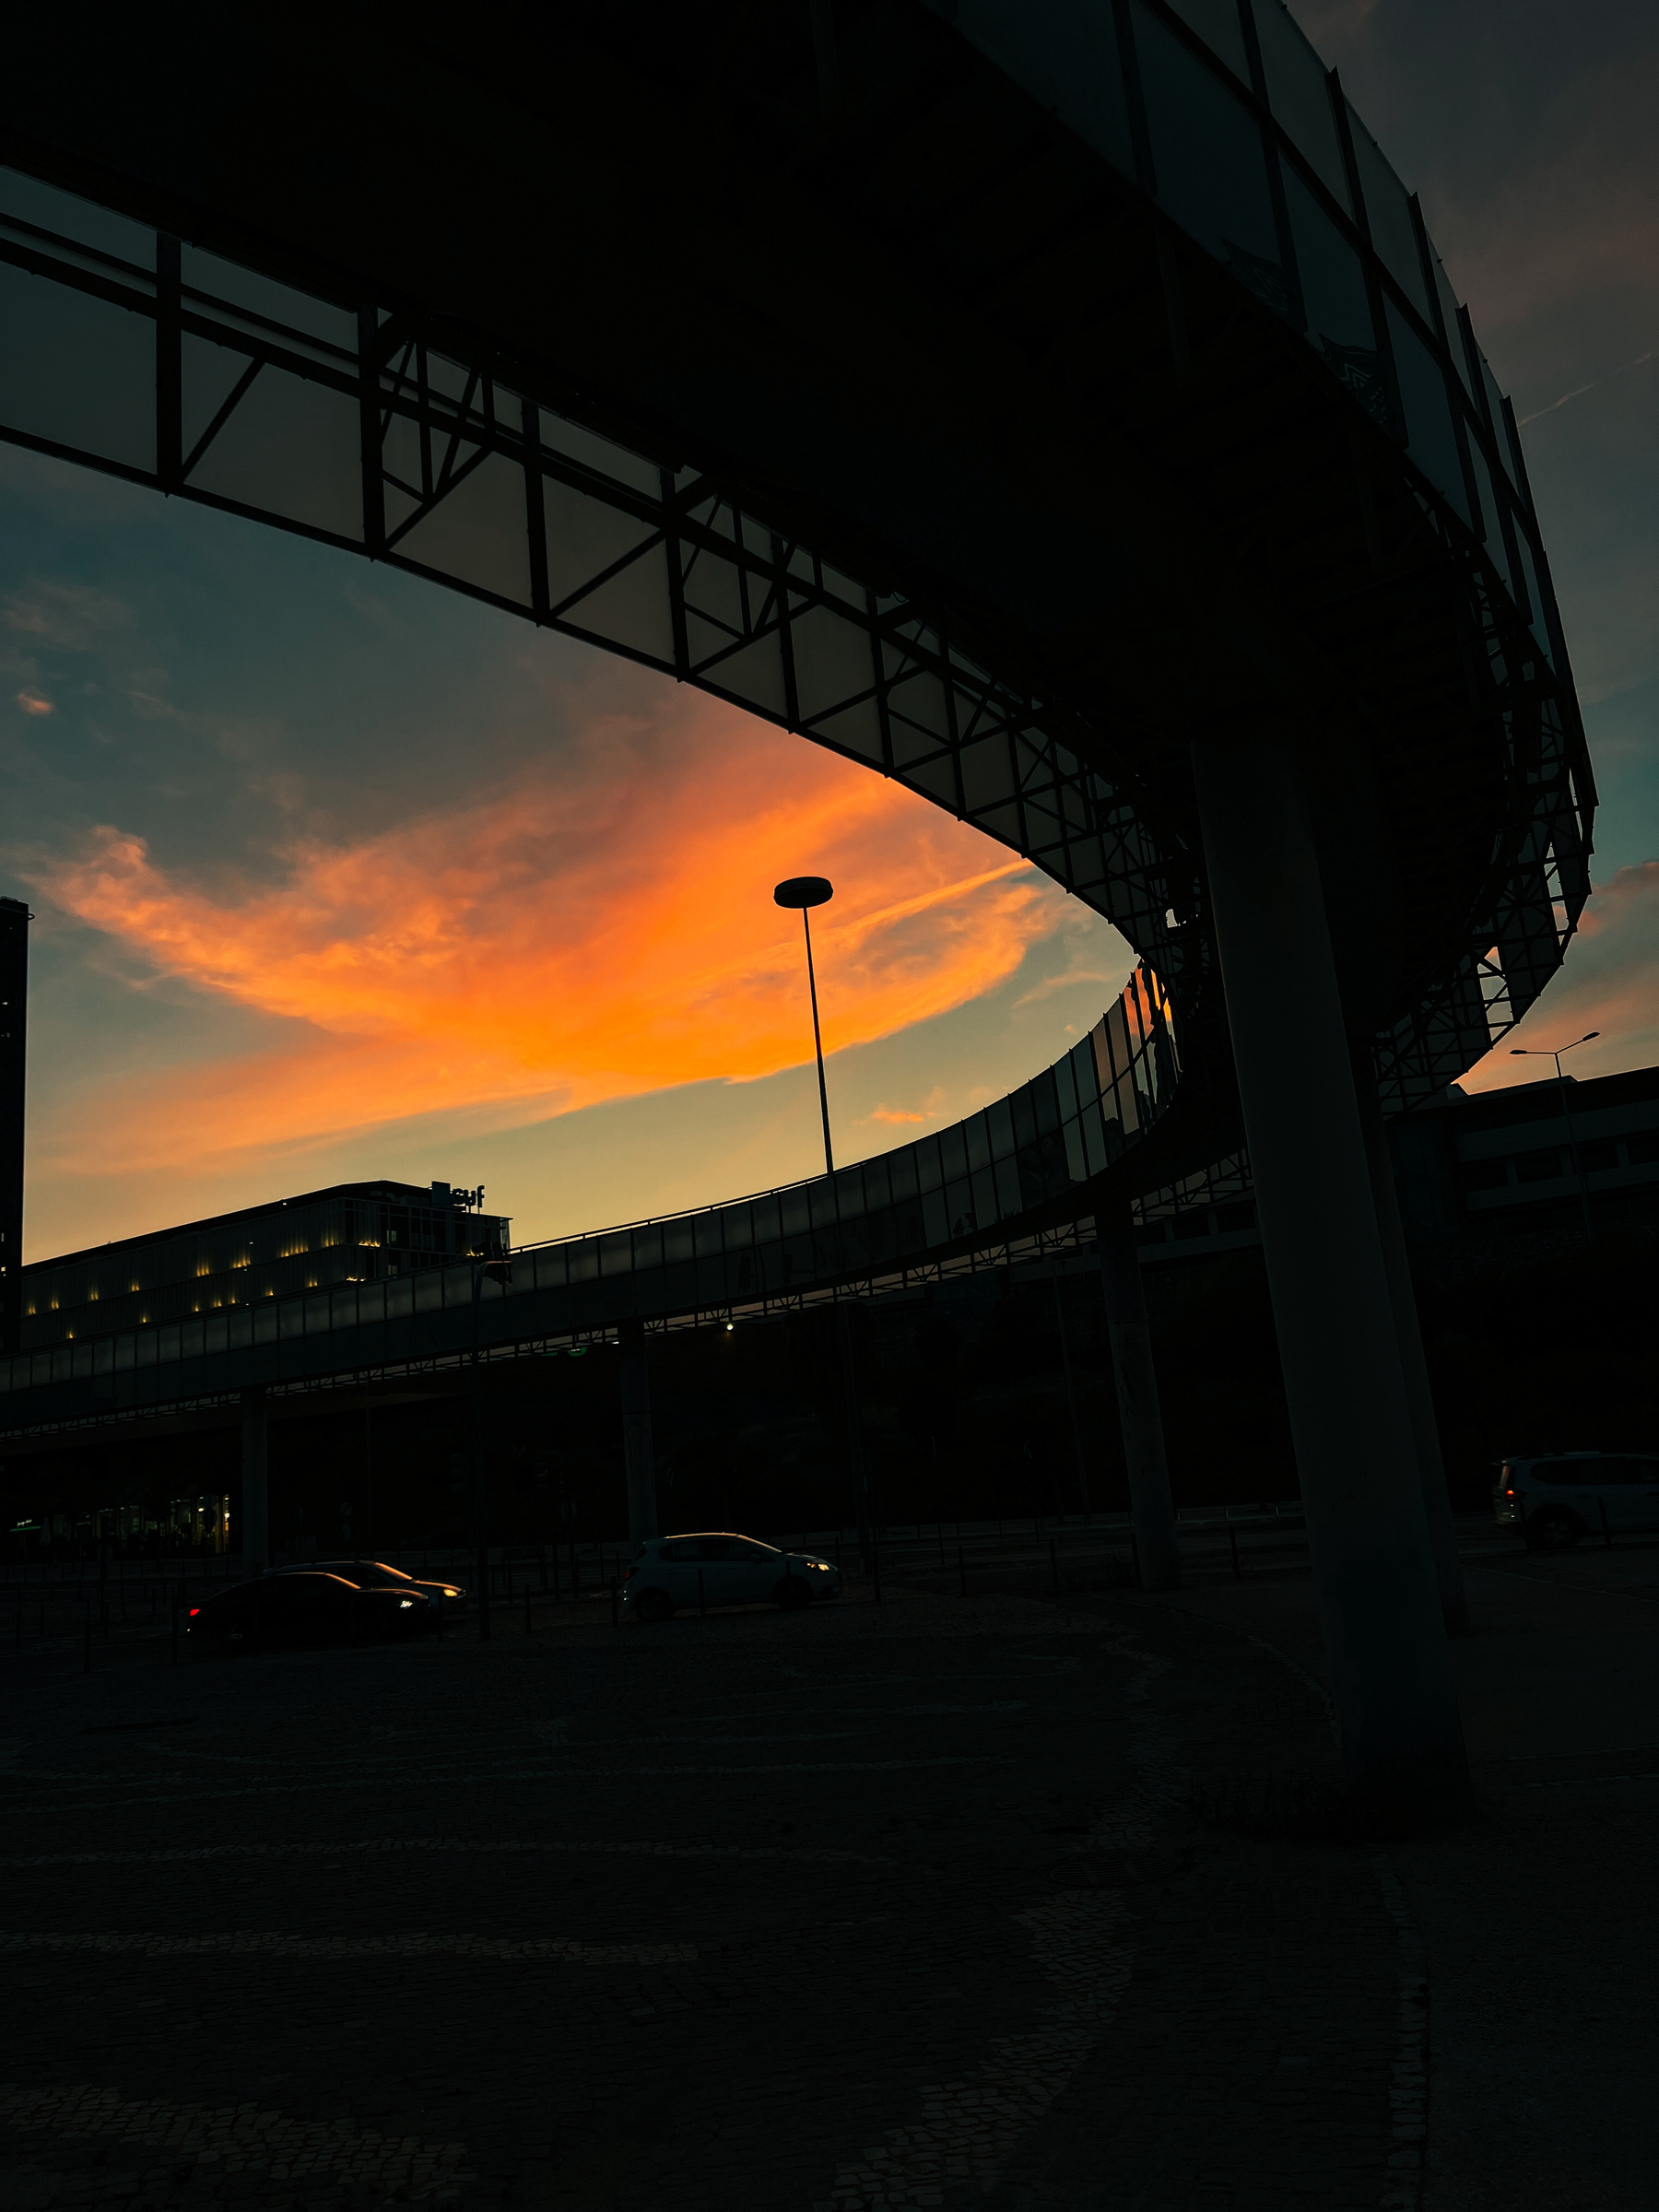 Sunset near an industrial structure.